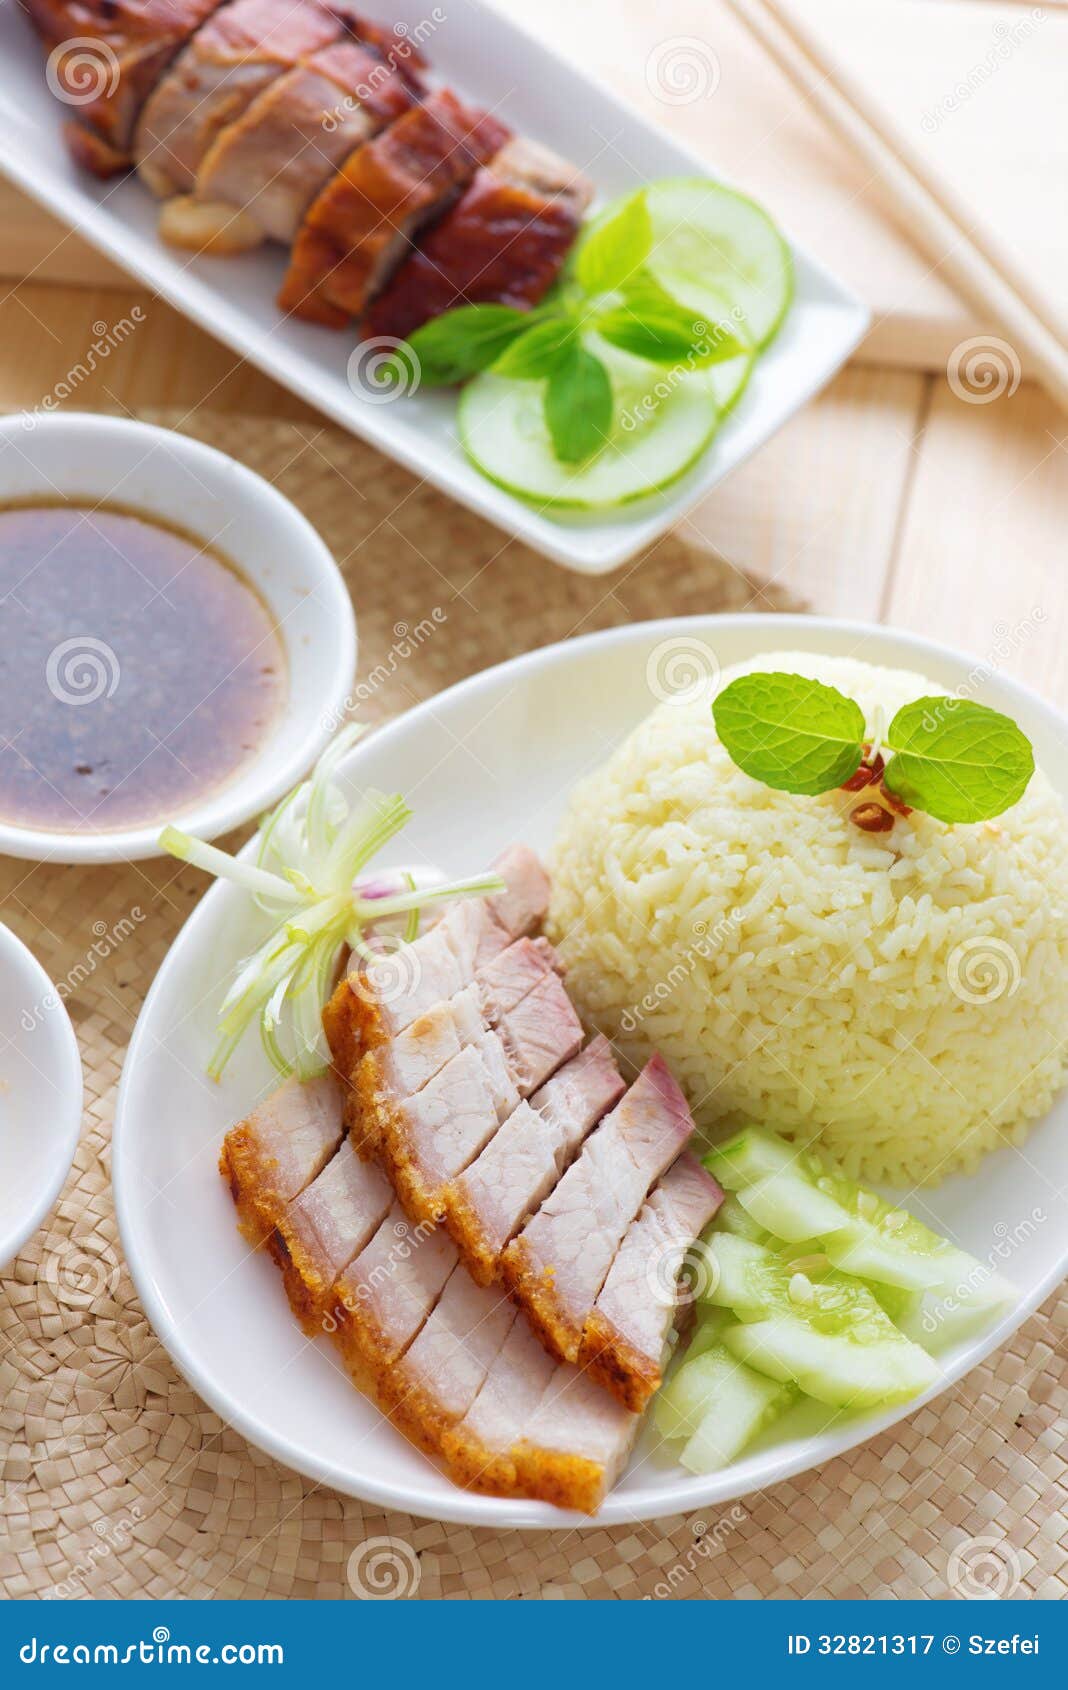 Siu Yuk or Crispy Roasted Belly Pork Stock Image - Image of culture ...